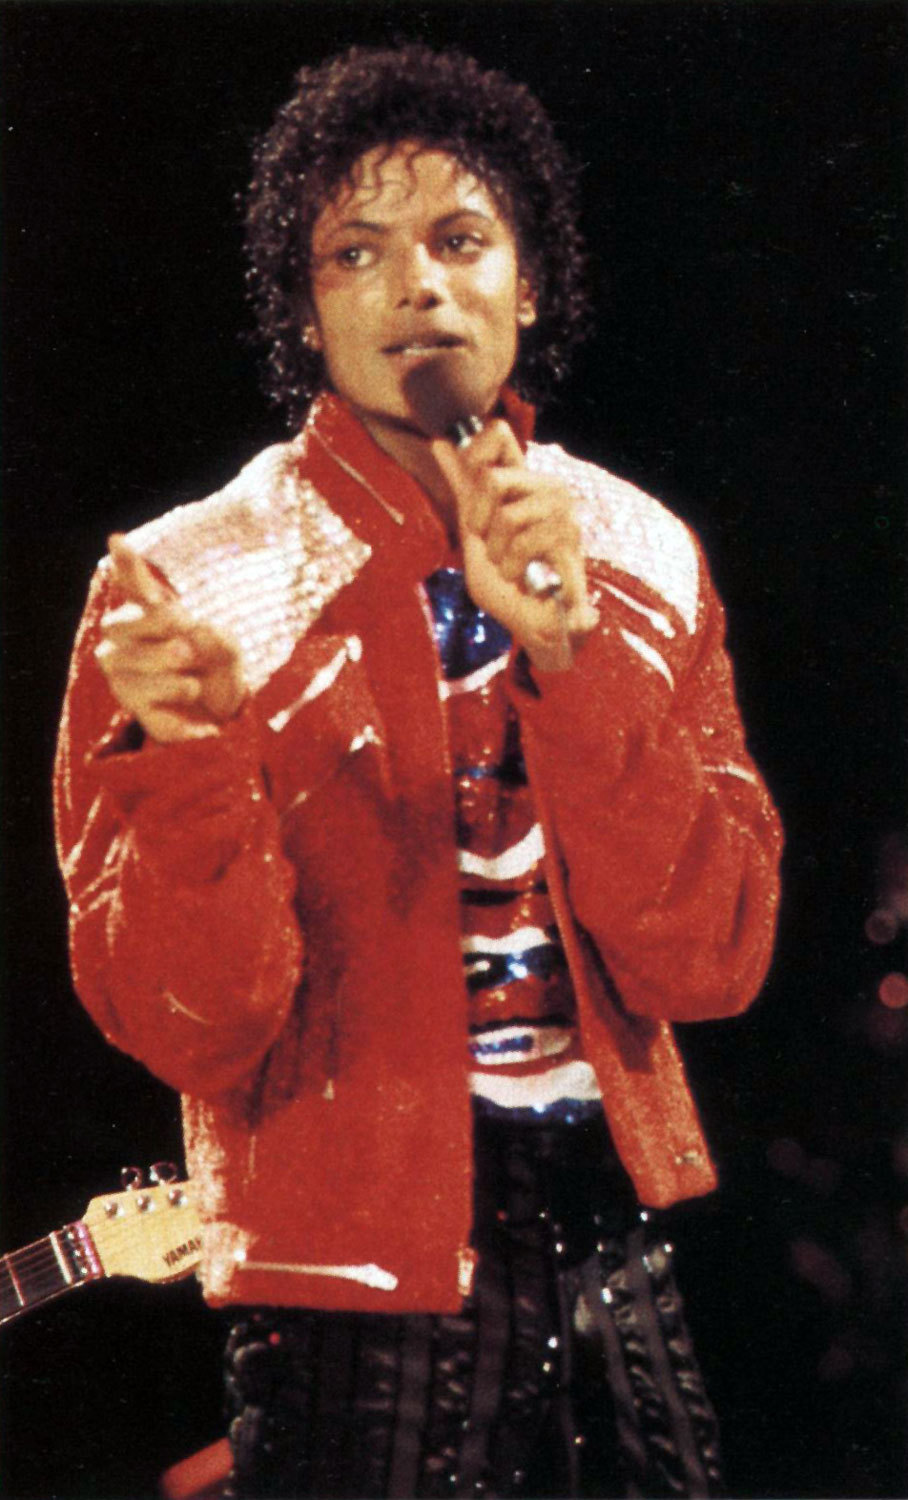 http://images4.fanpop.com/image/photos/20400000/Michael-Jackson-THRILLER-ERA-the-thriller-era-20453206-908-1500.jpg